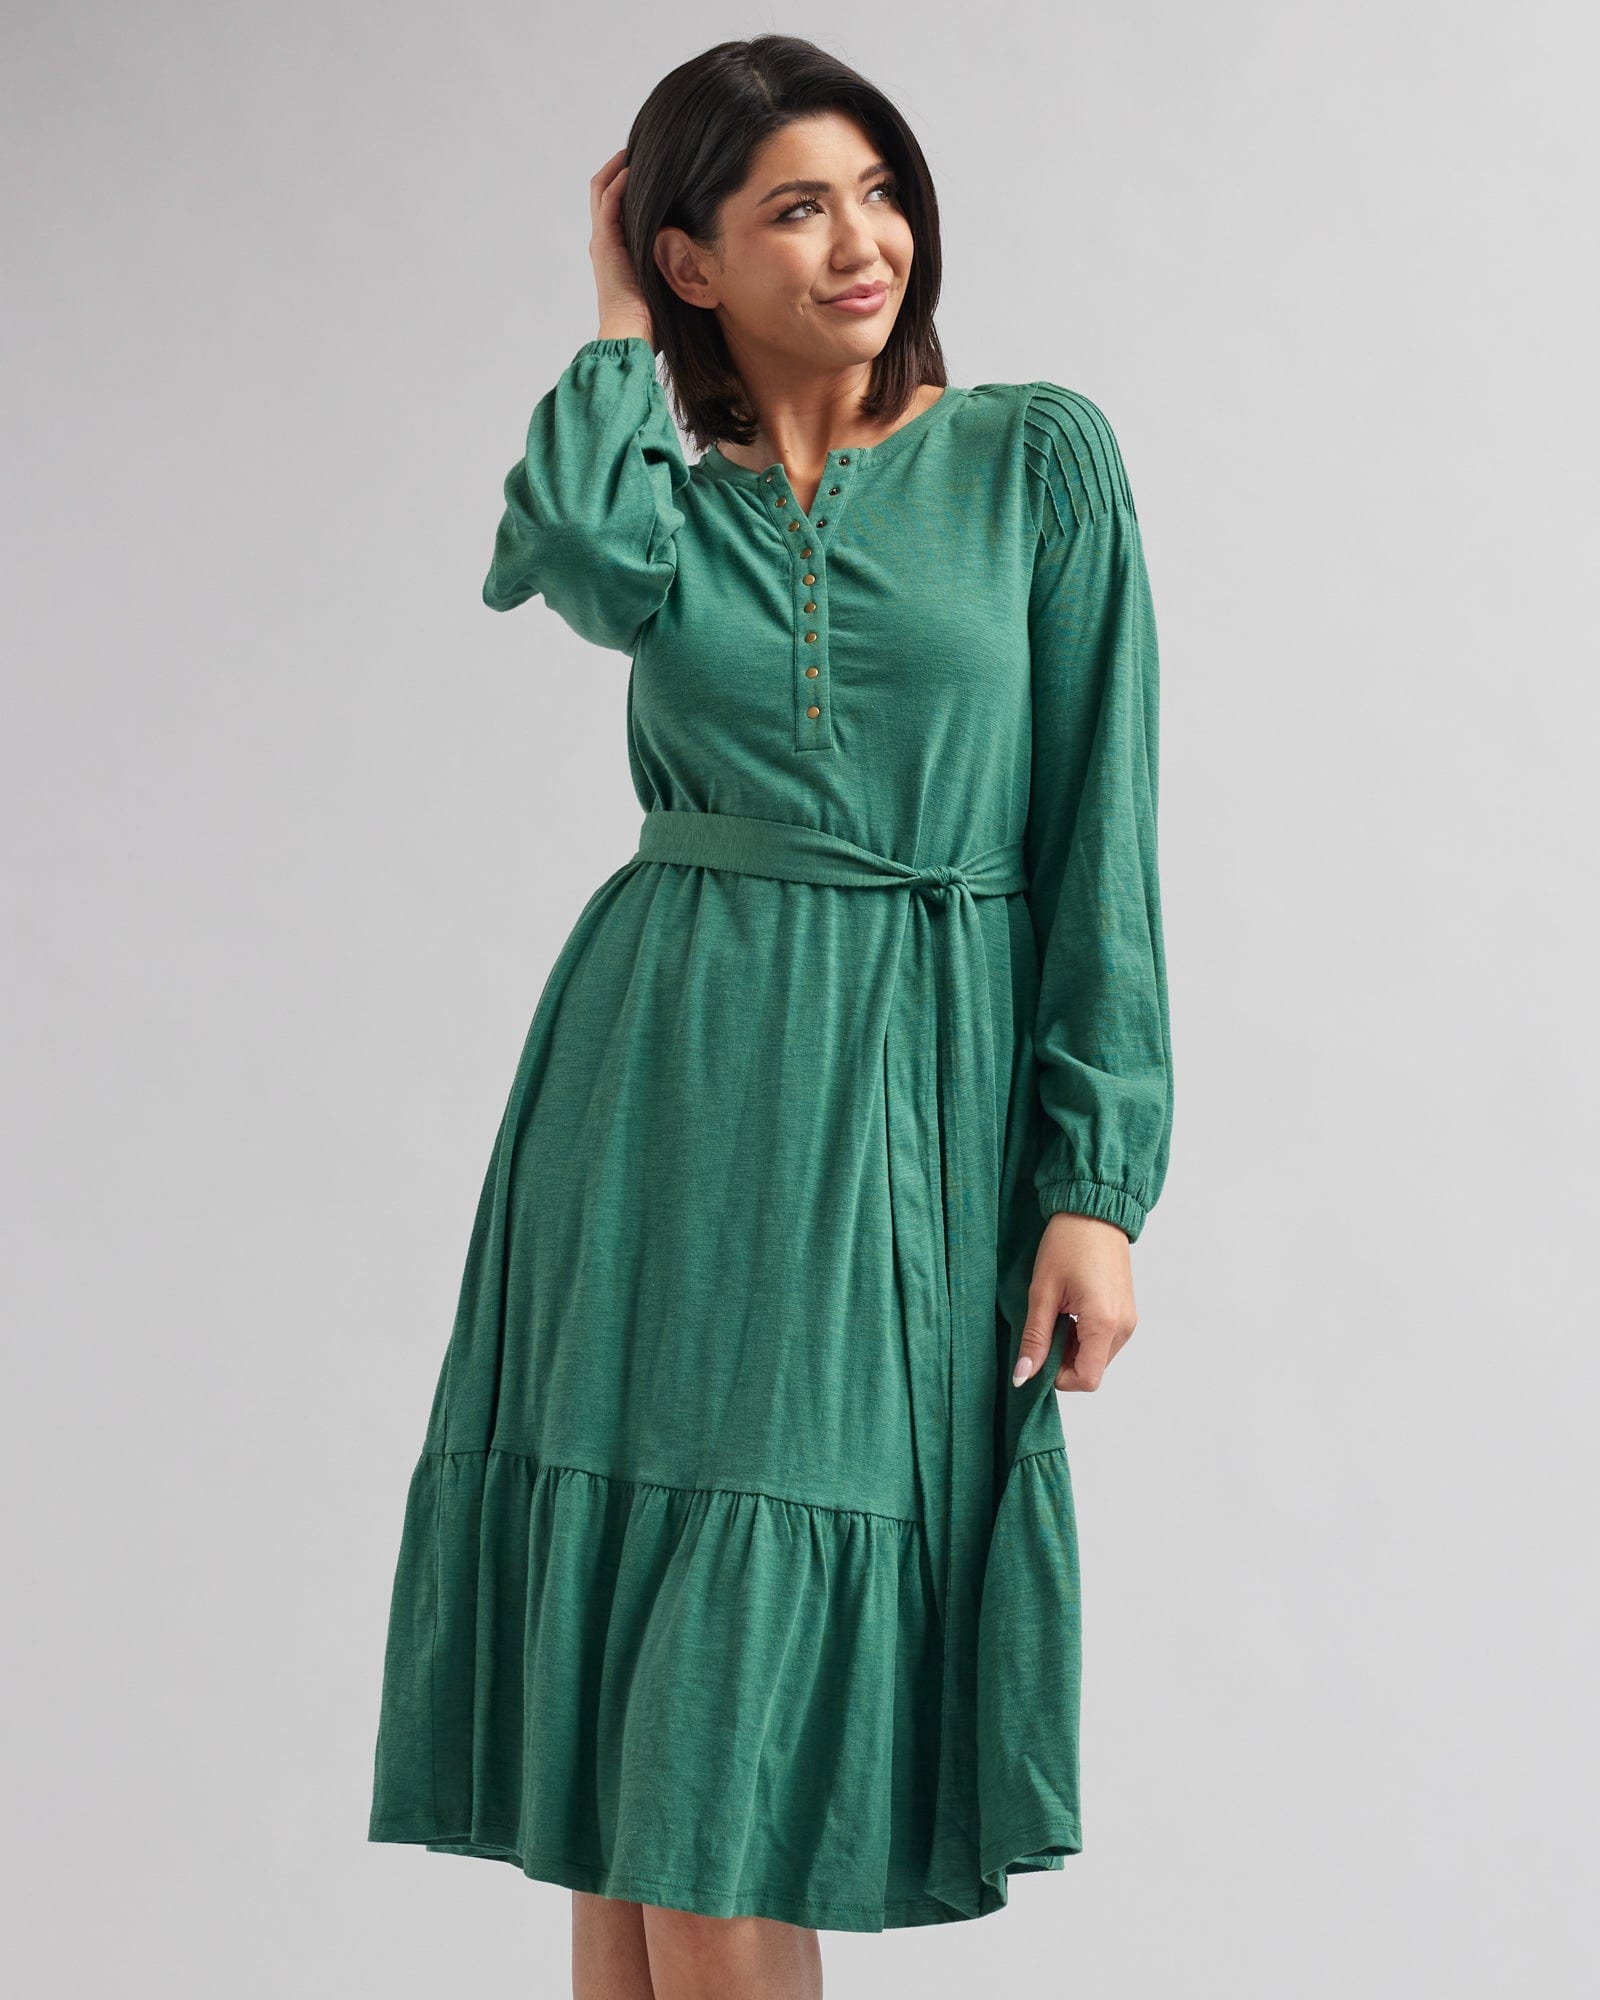 Woman in a long sleeve, midi-length, green dress